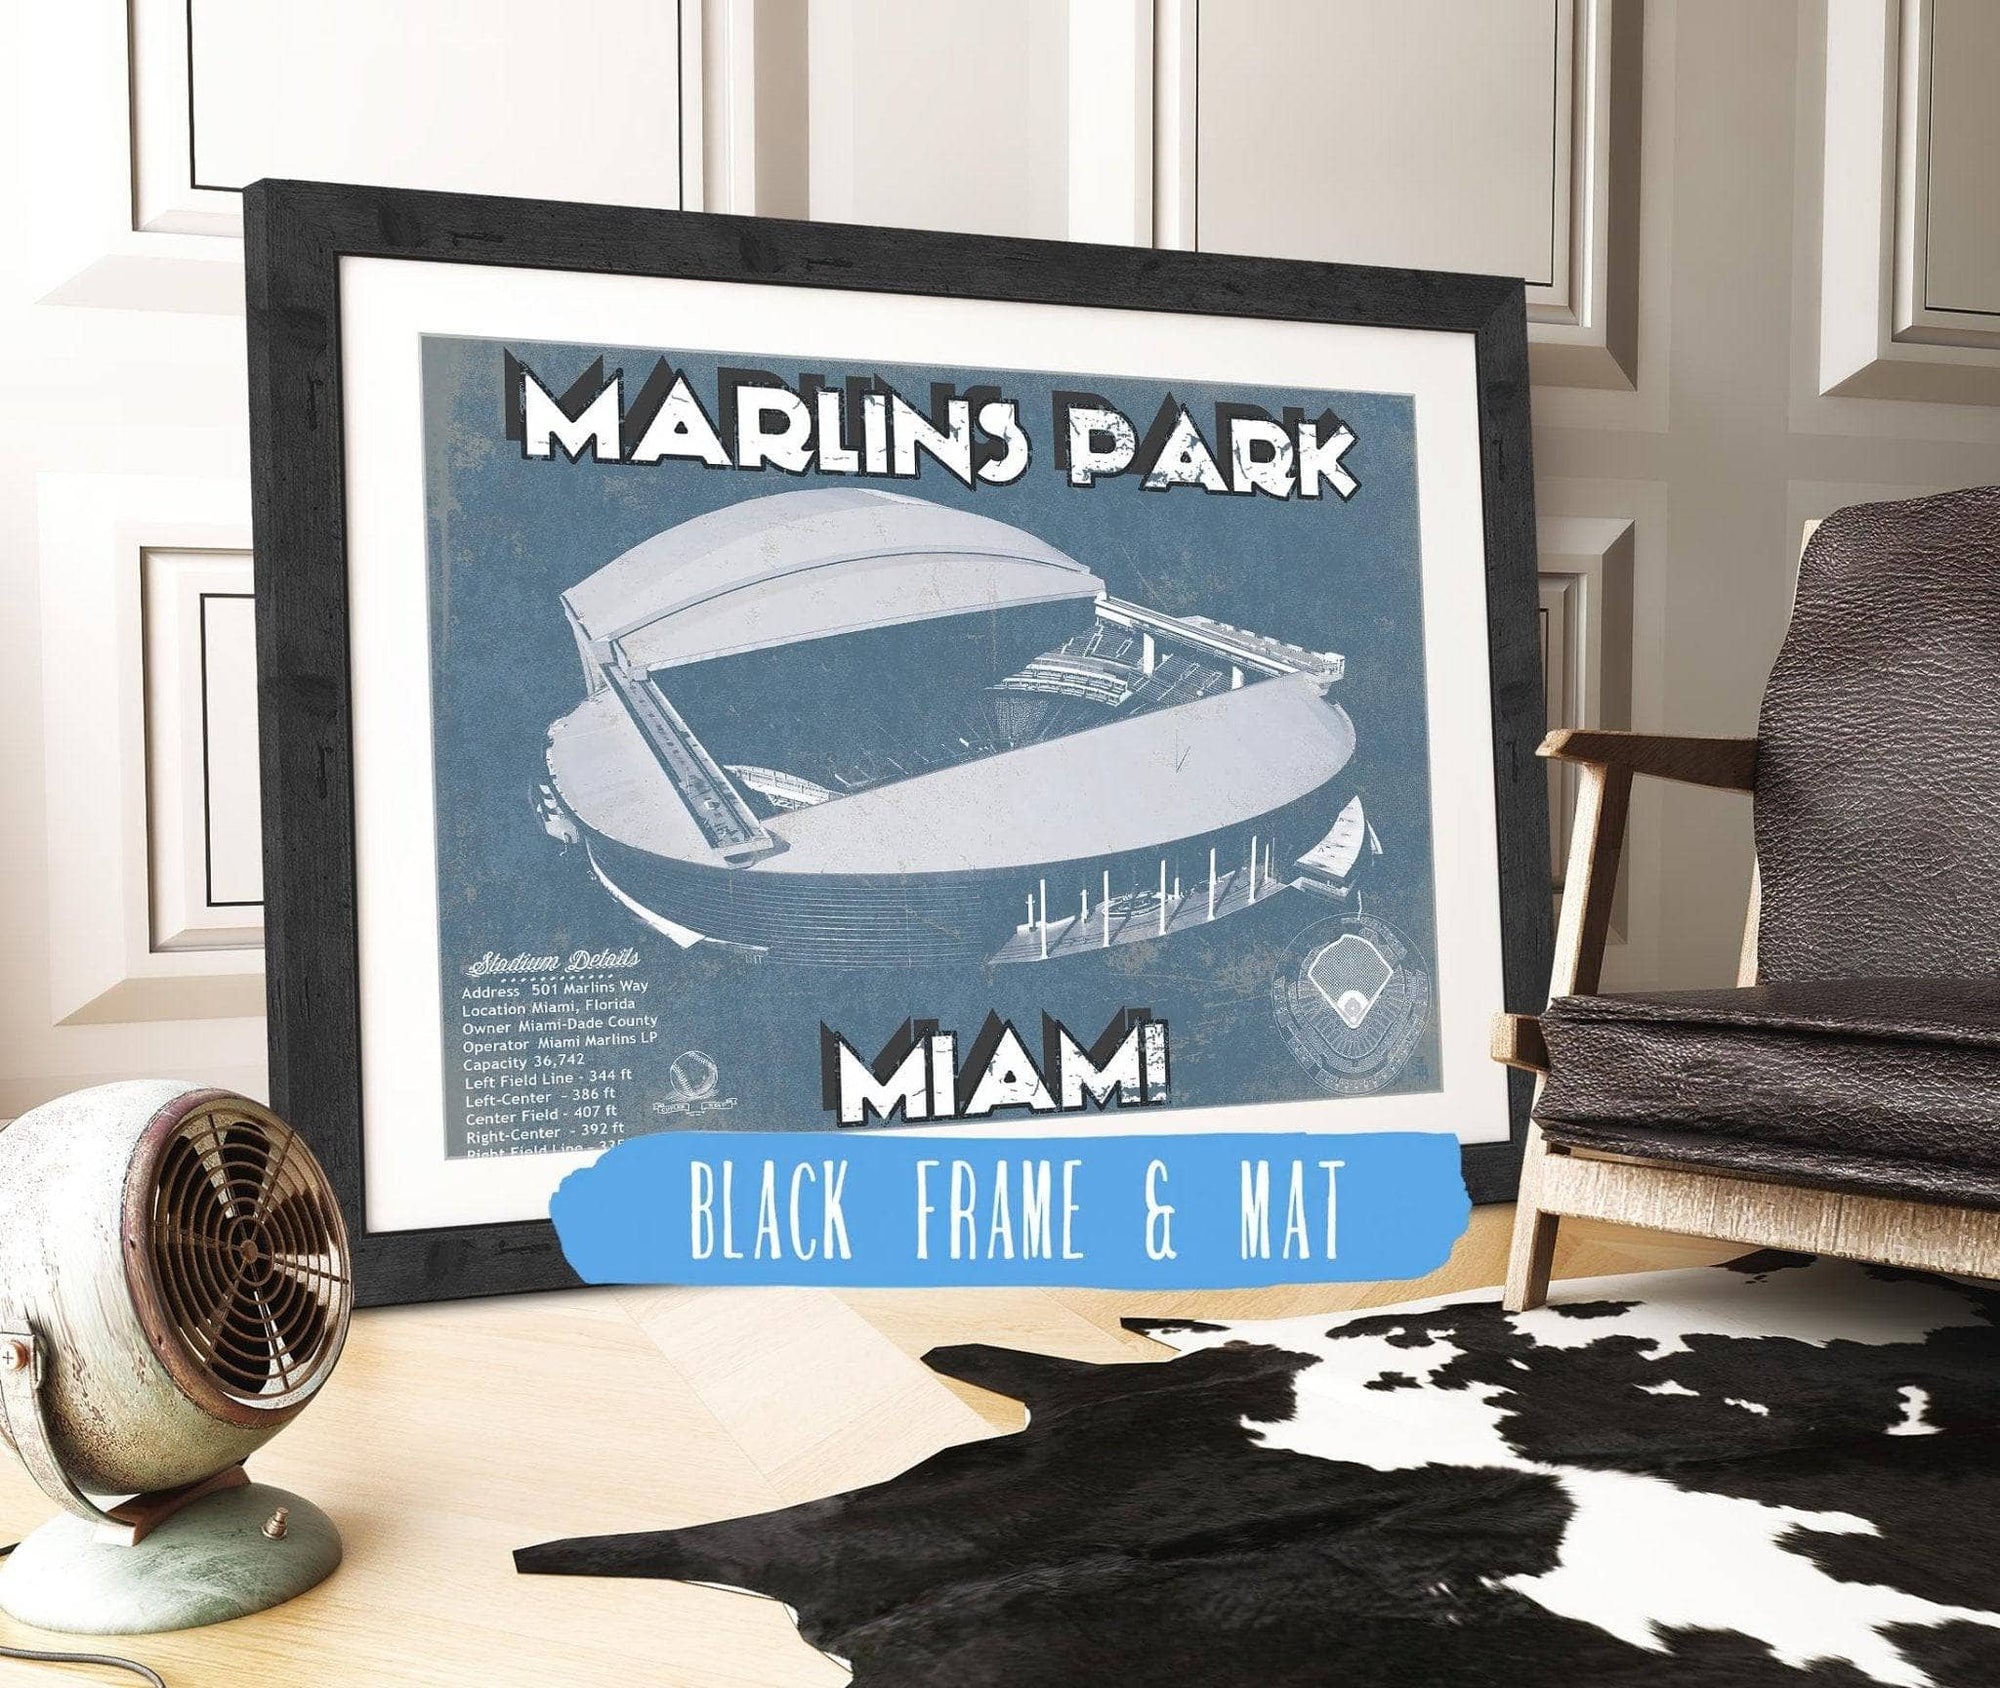 Cutler West Baseball Collection 14" x 11" / Black Frame & Mat Miami Marlins - Marlins Park Vintage Baseball Fan Print 718123457_73531